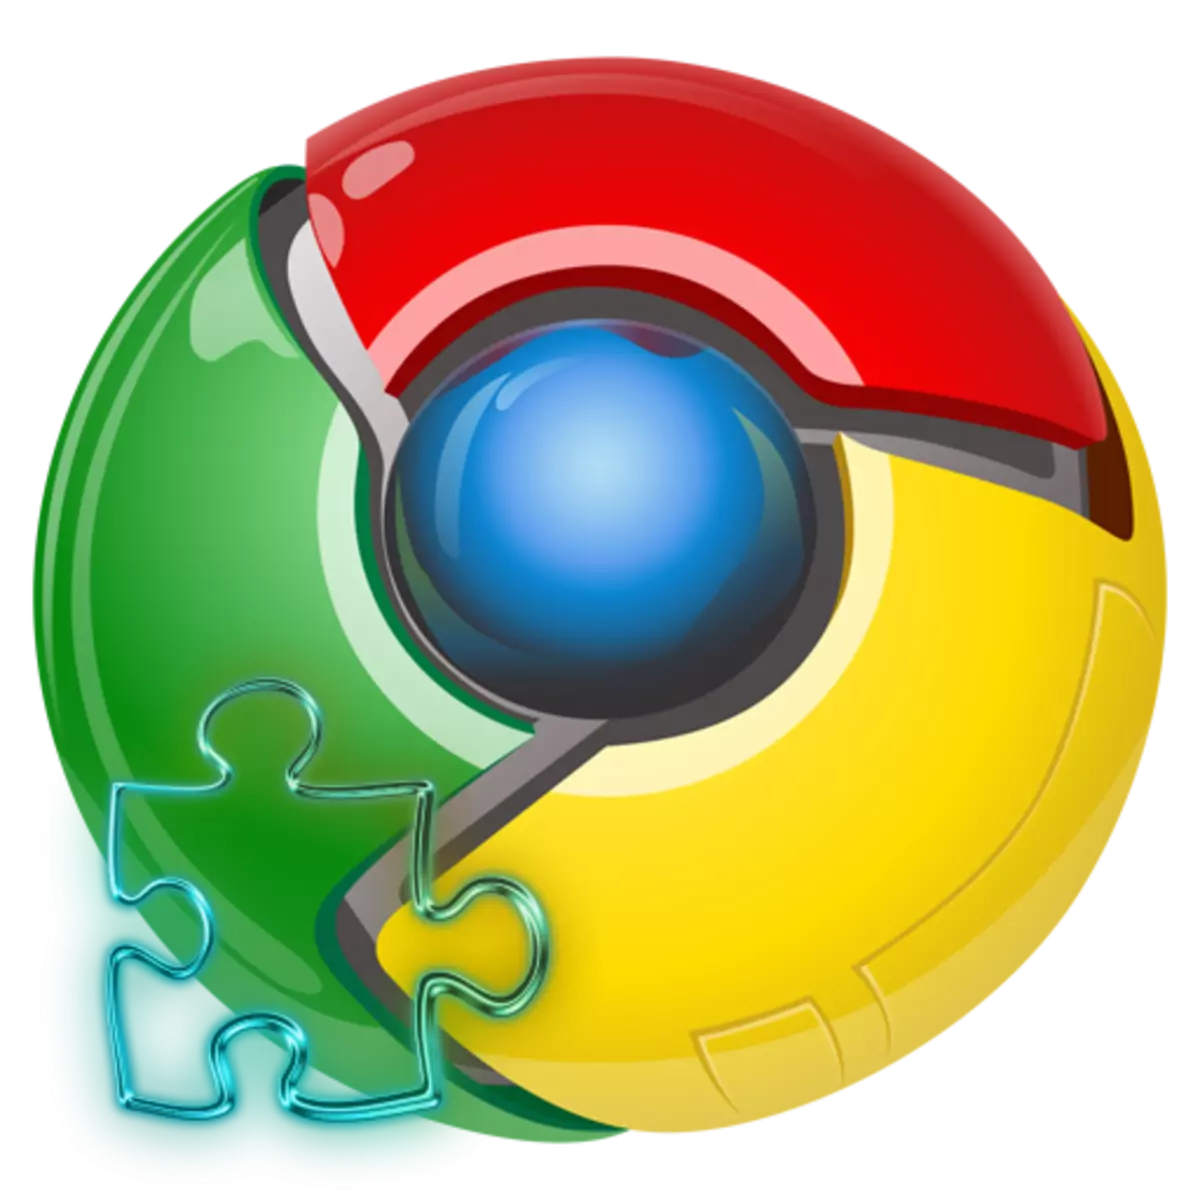 Chrome components အတွက် updates များကိုစစ်ဆေးခြင်း